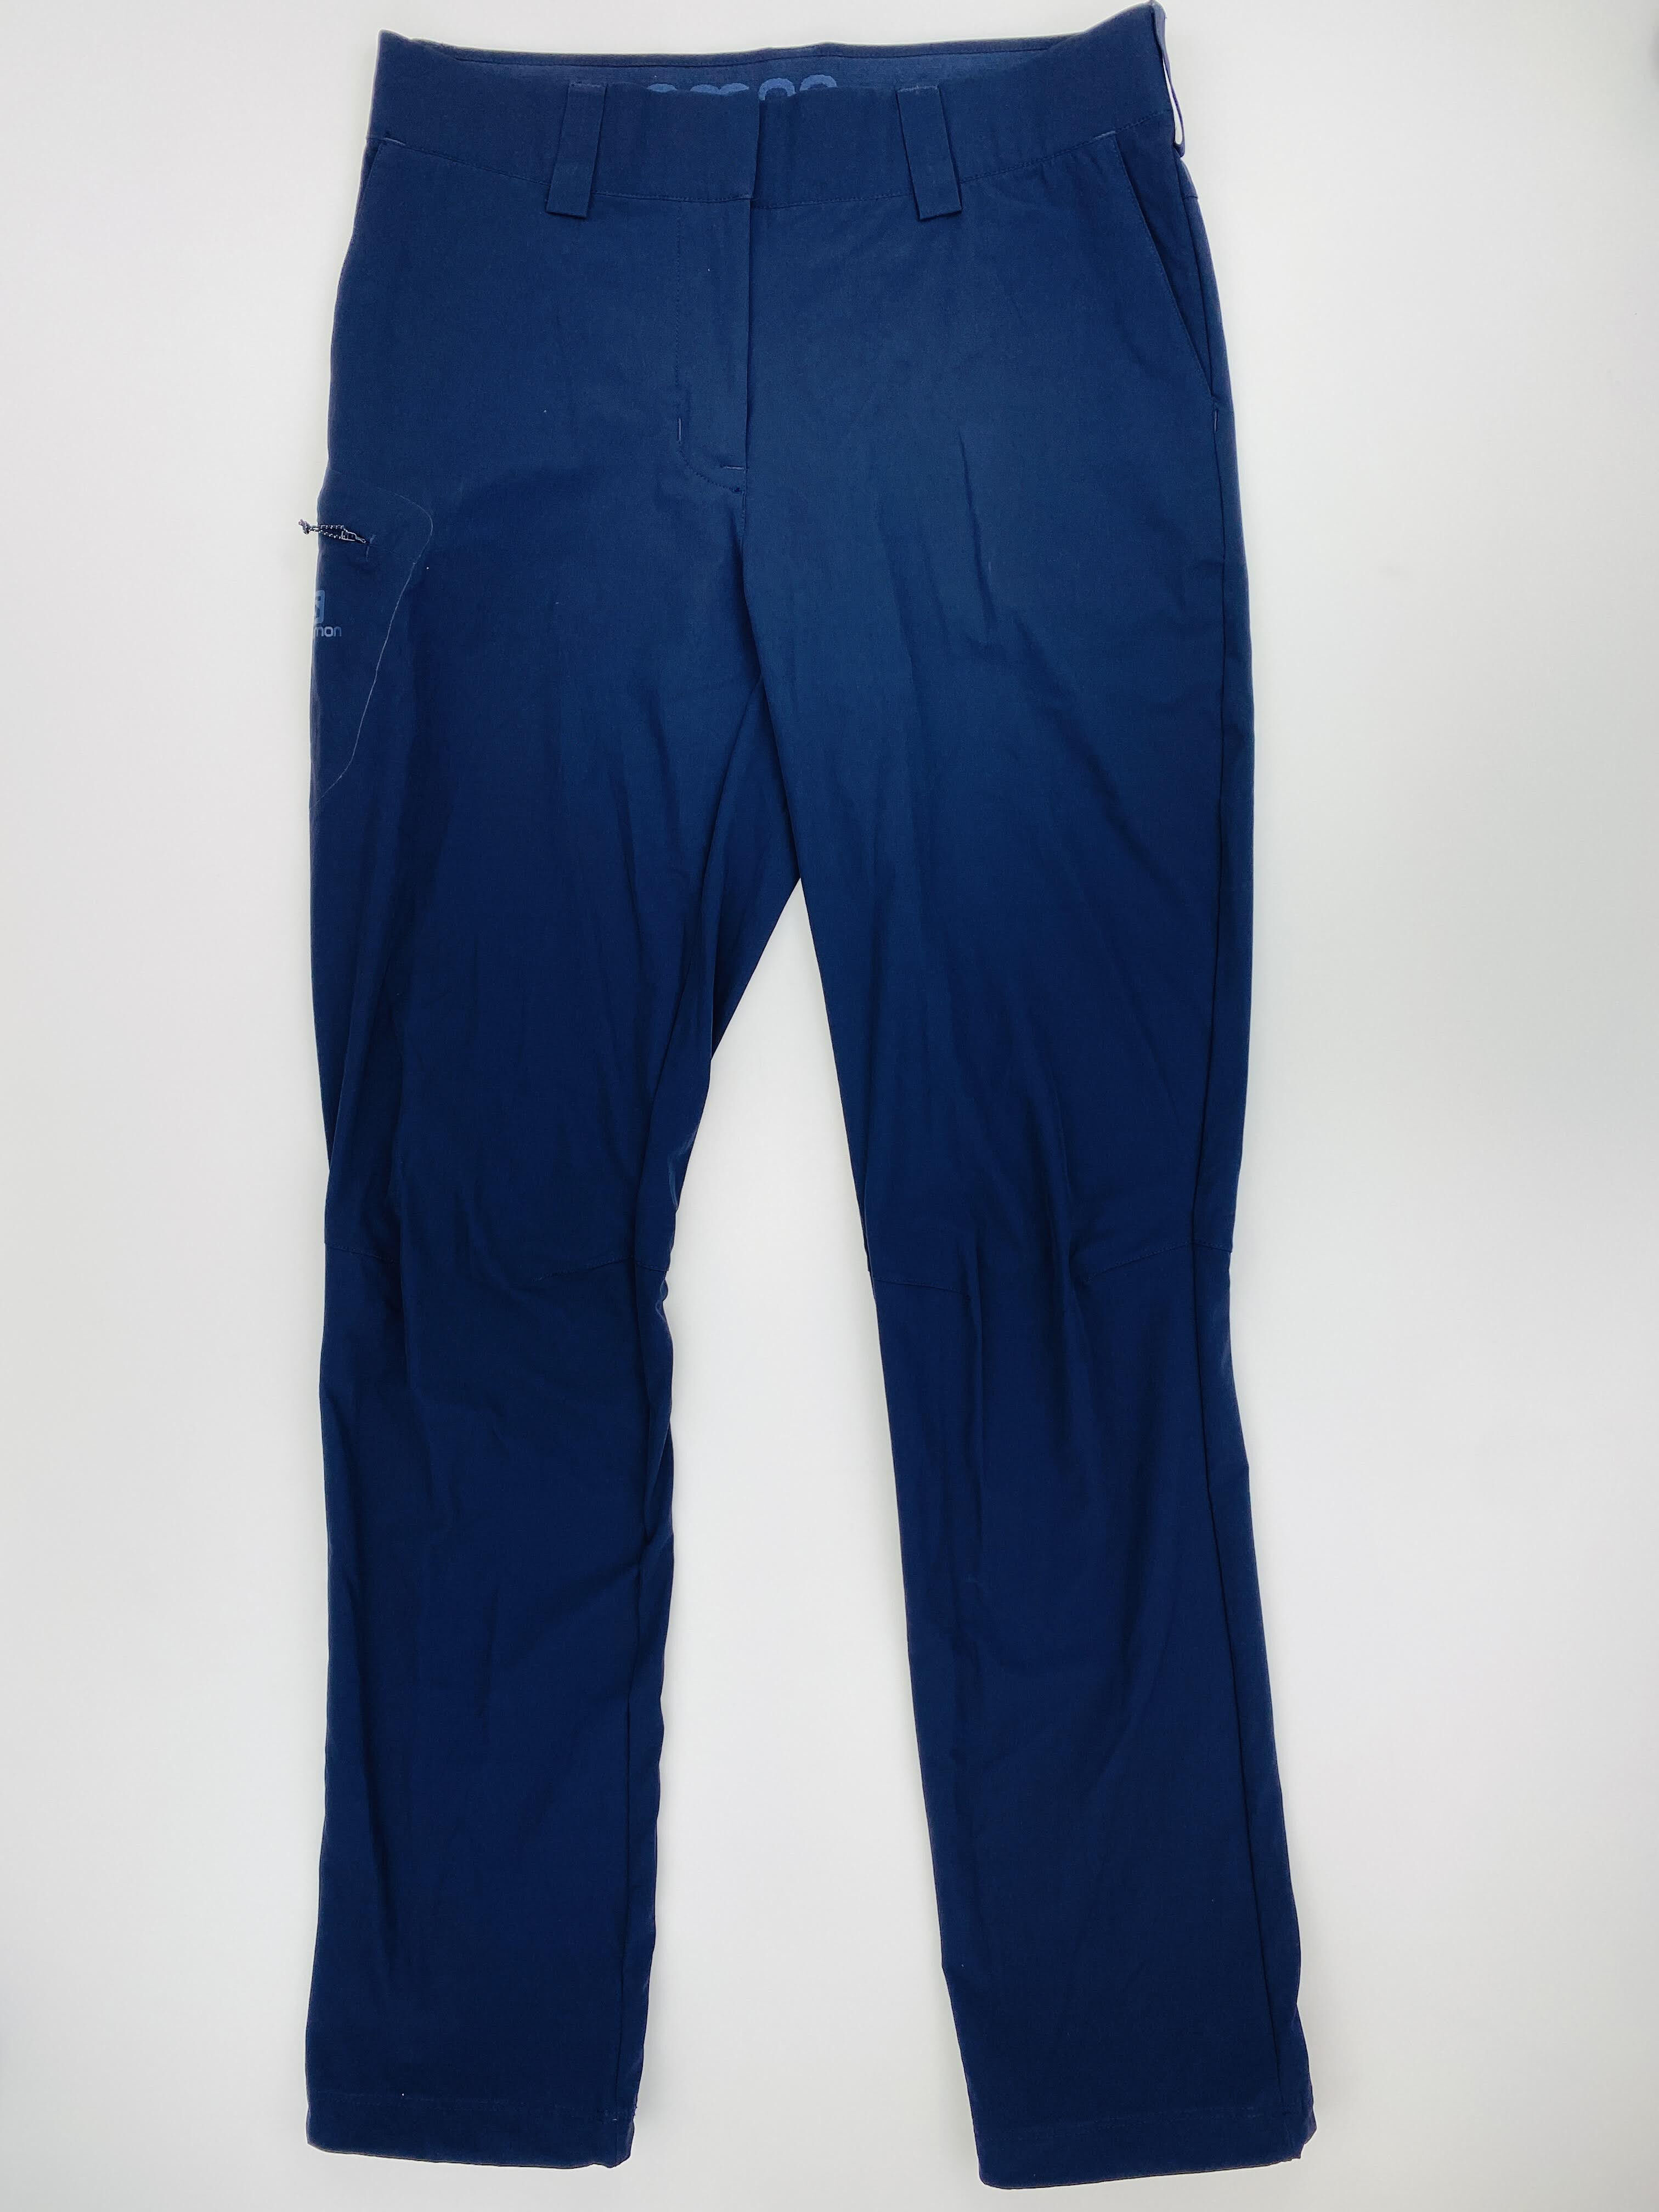 Salomon Pants Exo Motion Long Tight - Seconde main Pantalon randonnée homme - Bleu - M | Hardloop